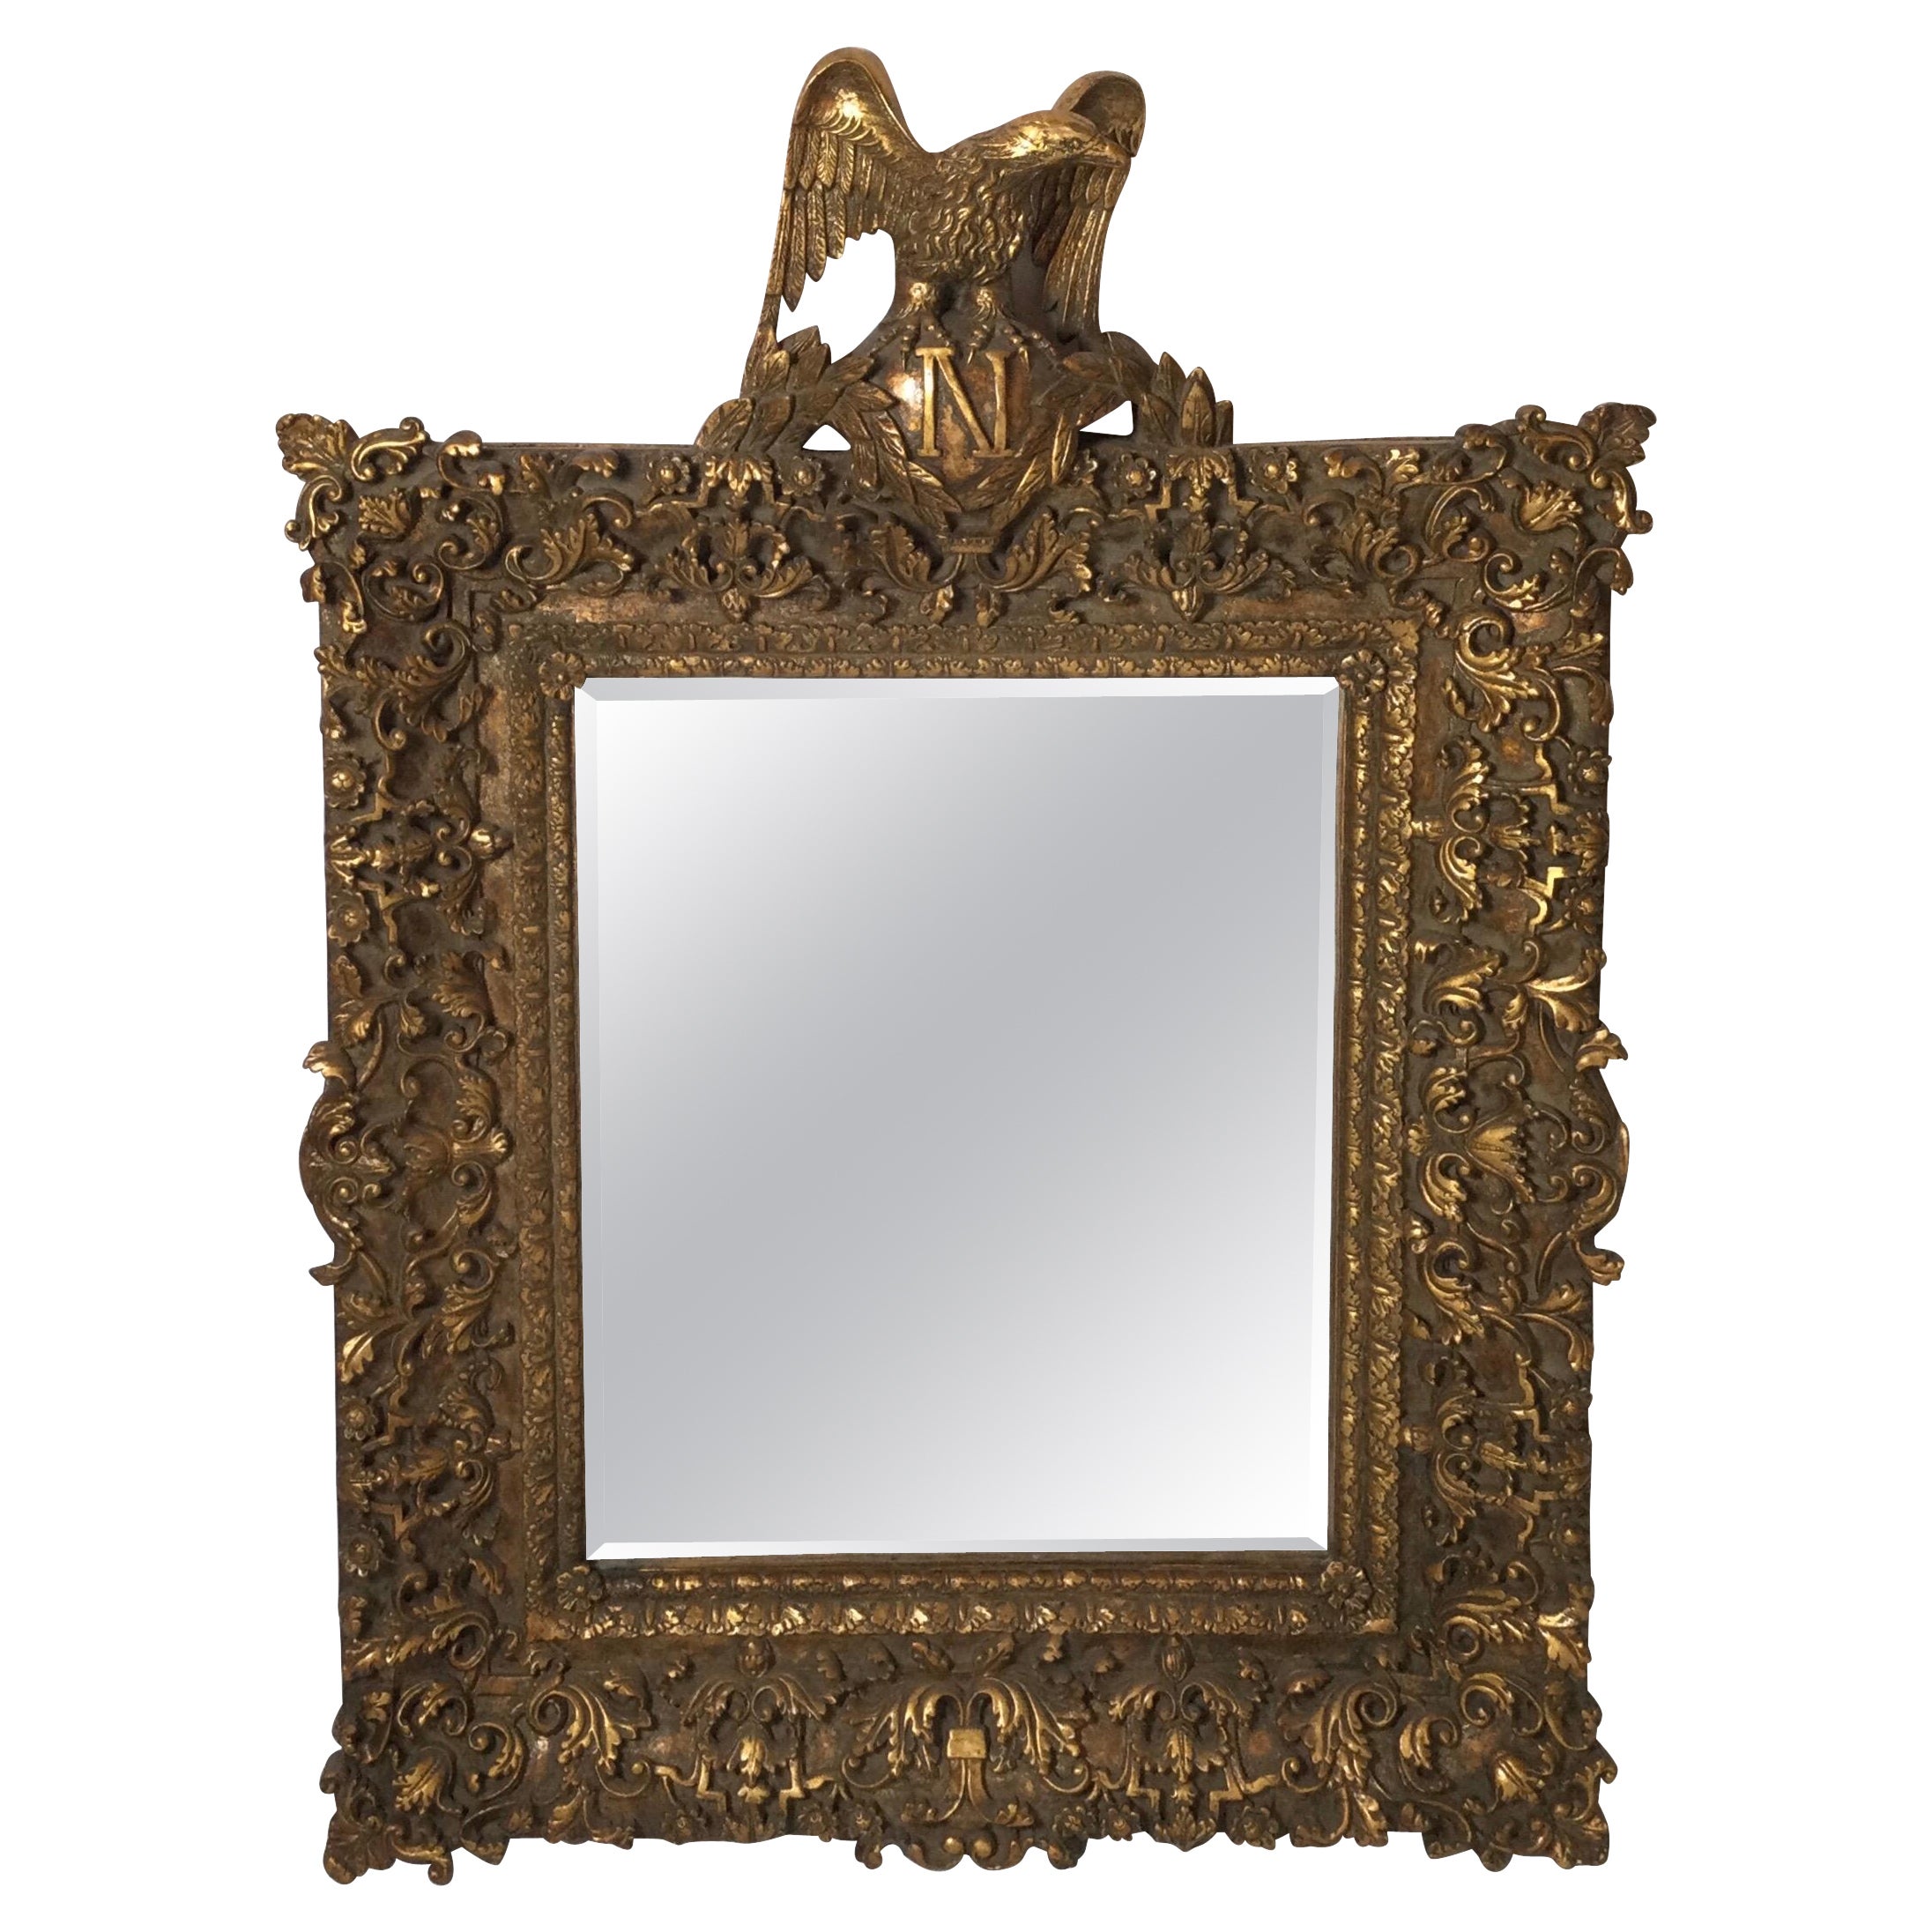 Spiegel aus vergoldetem Holz im Regency-Stil